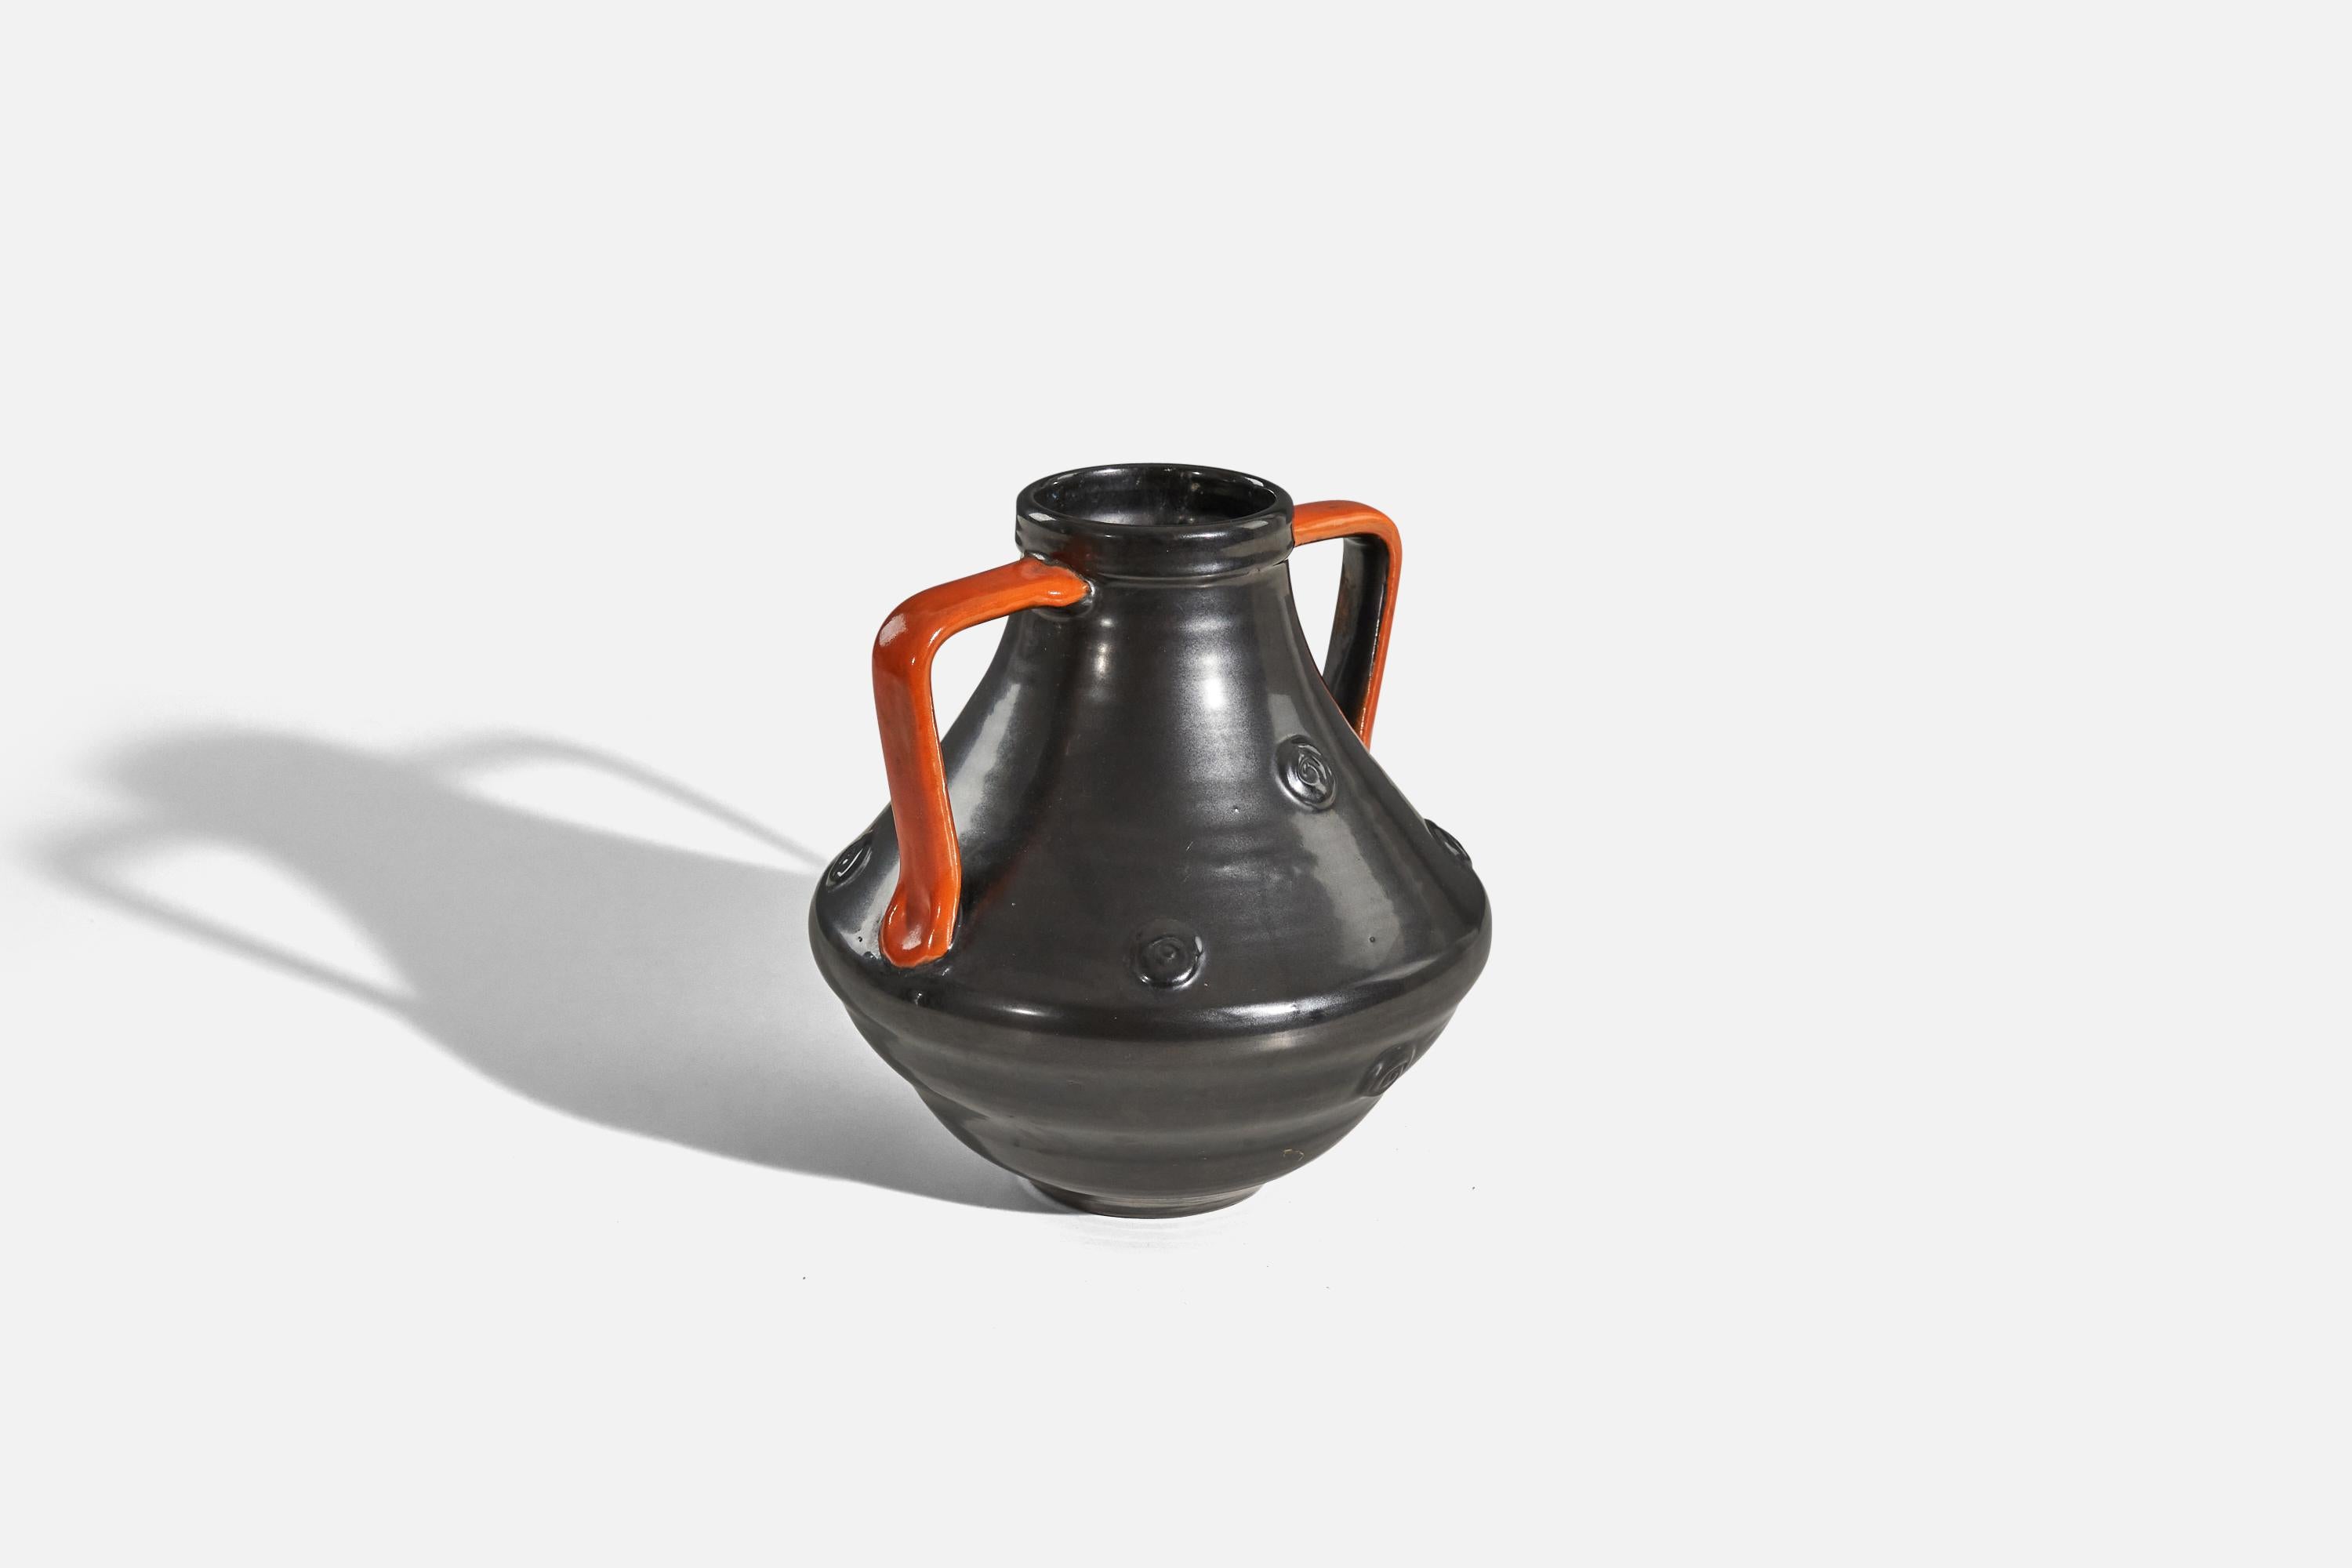 Scandinavian Modern Upsala-Ekeby, Vase, Black and Orange-Glazed Earthenware, Sweden, 1940s For Sale